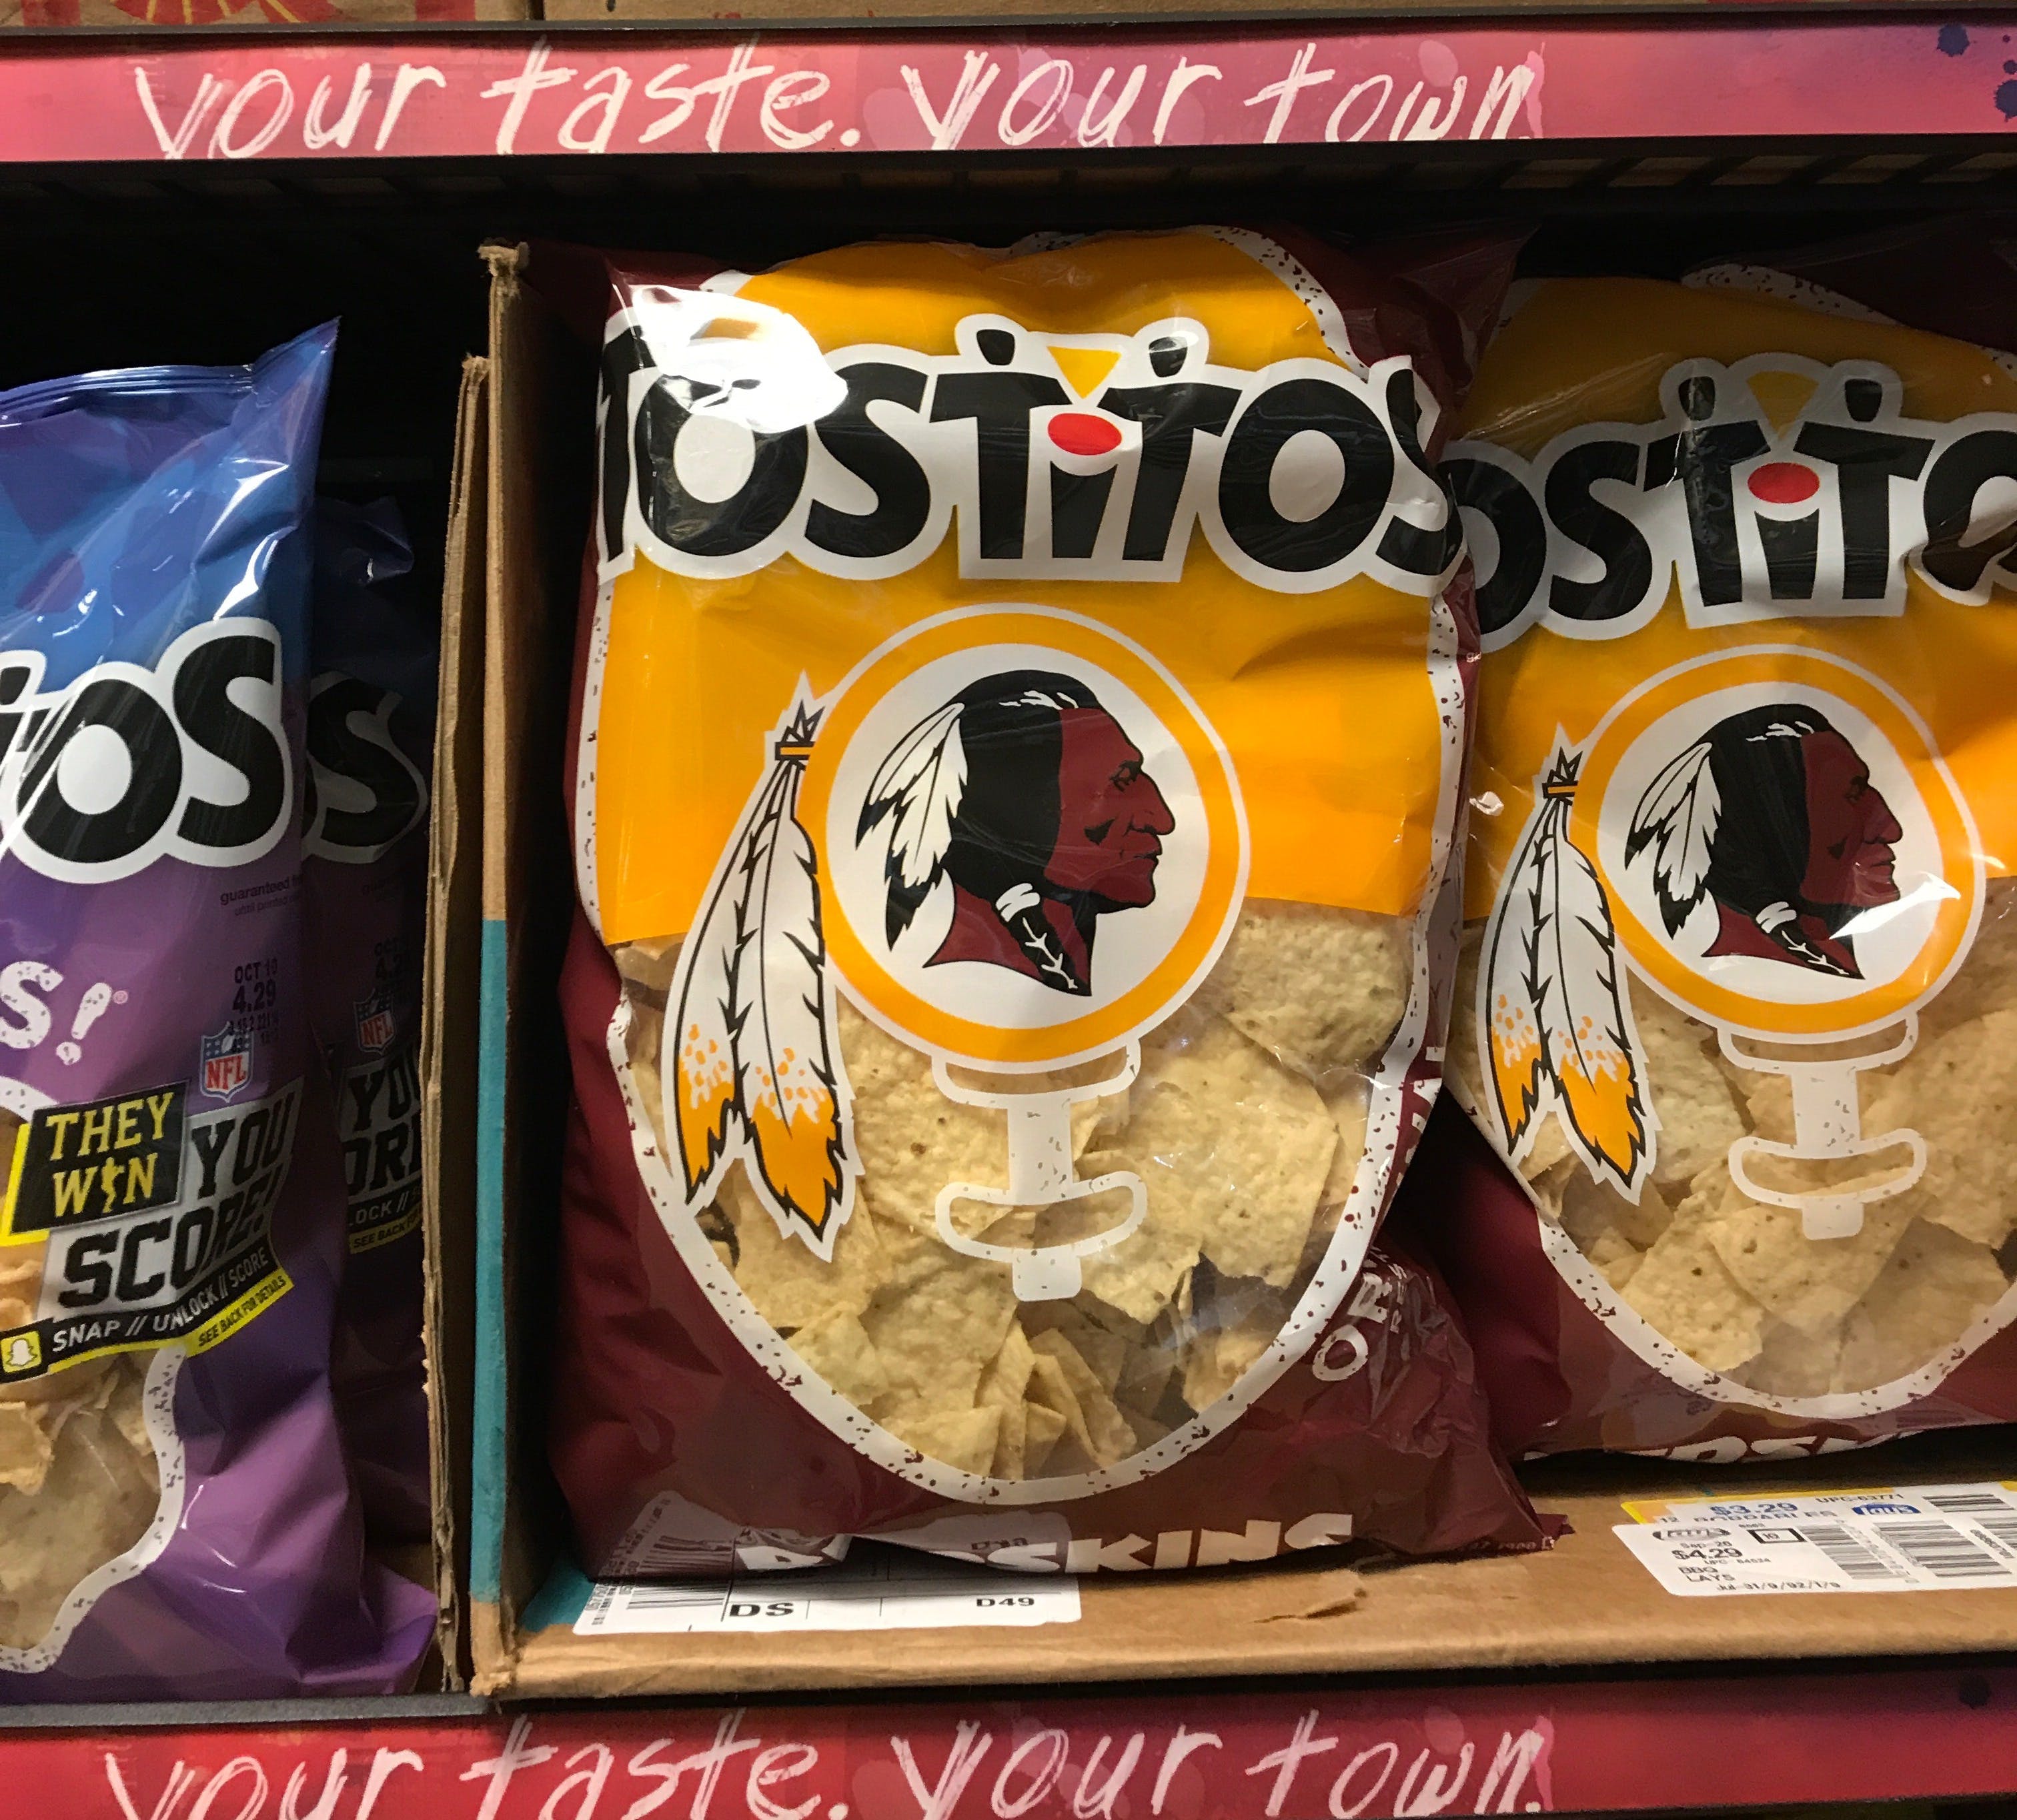 Tostitos Chips Logo - Tostitos Put Washington NFL Team Logo on Bag, Setting Off Debate